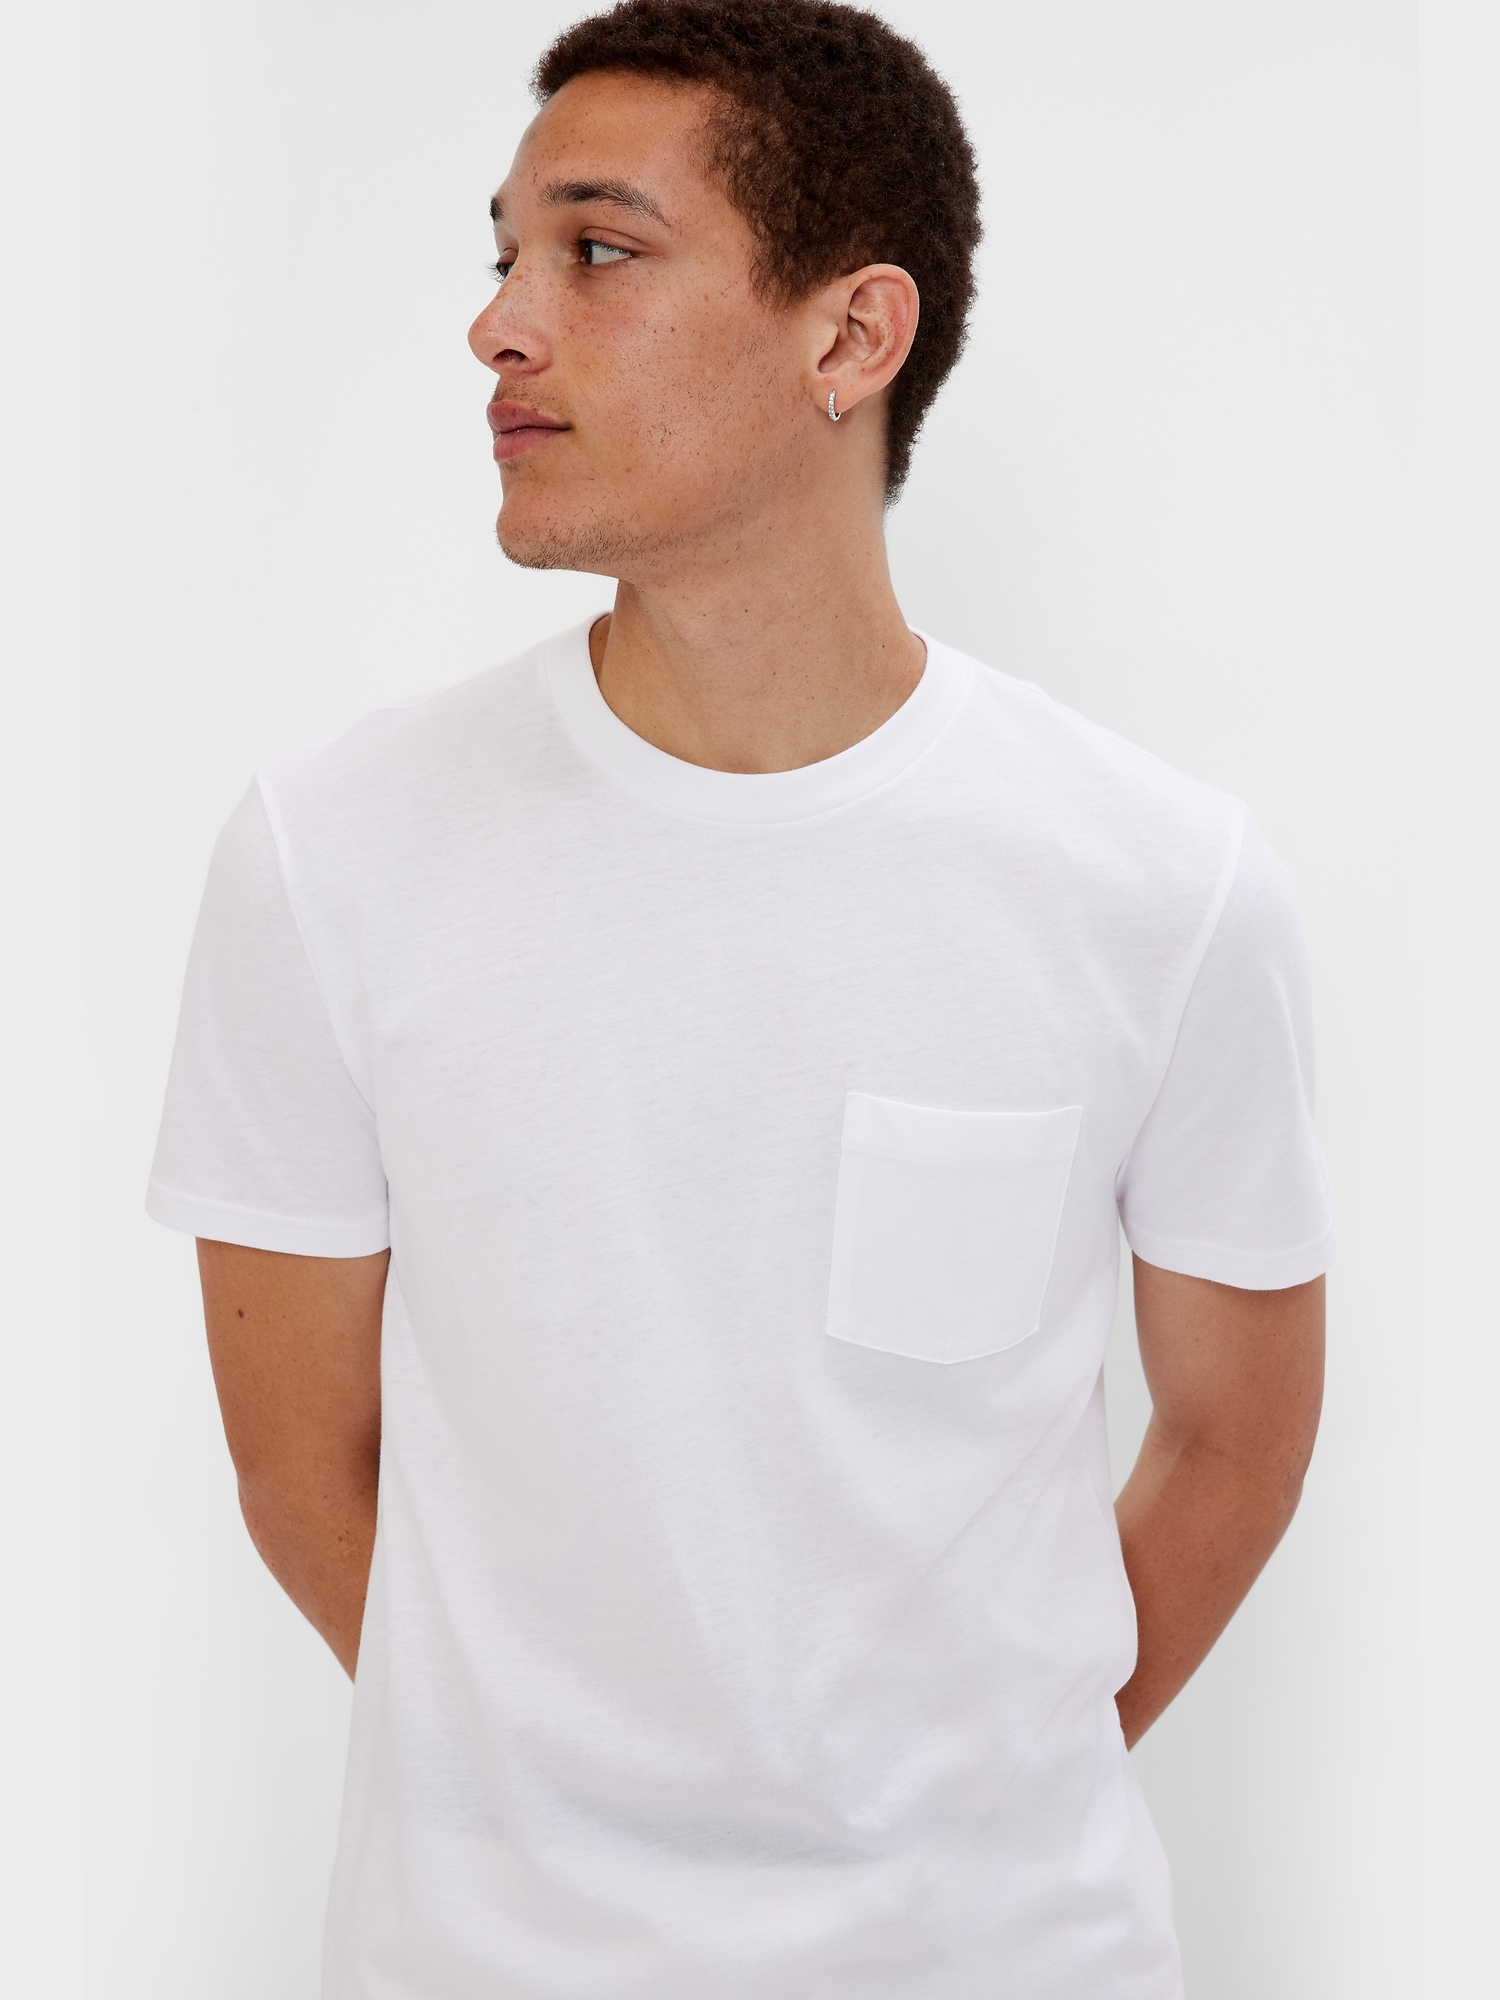 GAP Mens Pocket T-Shirt (3 Pack) T Shirt, Multi, X-Small US